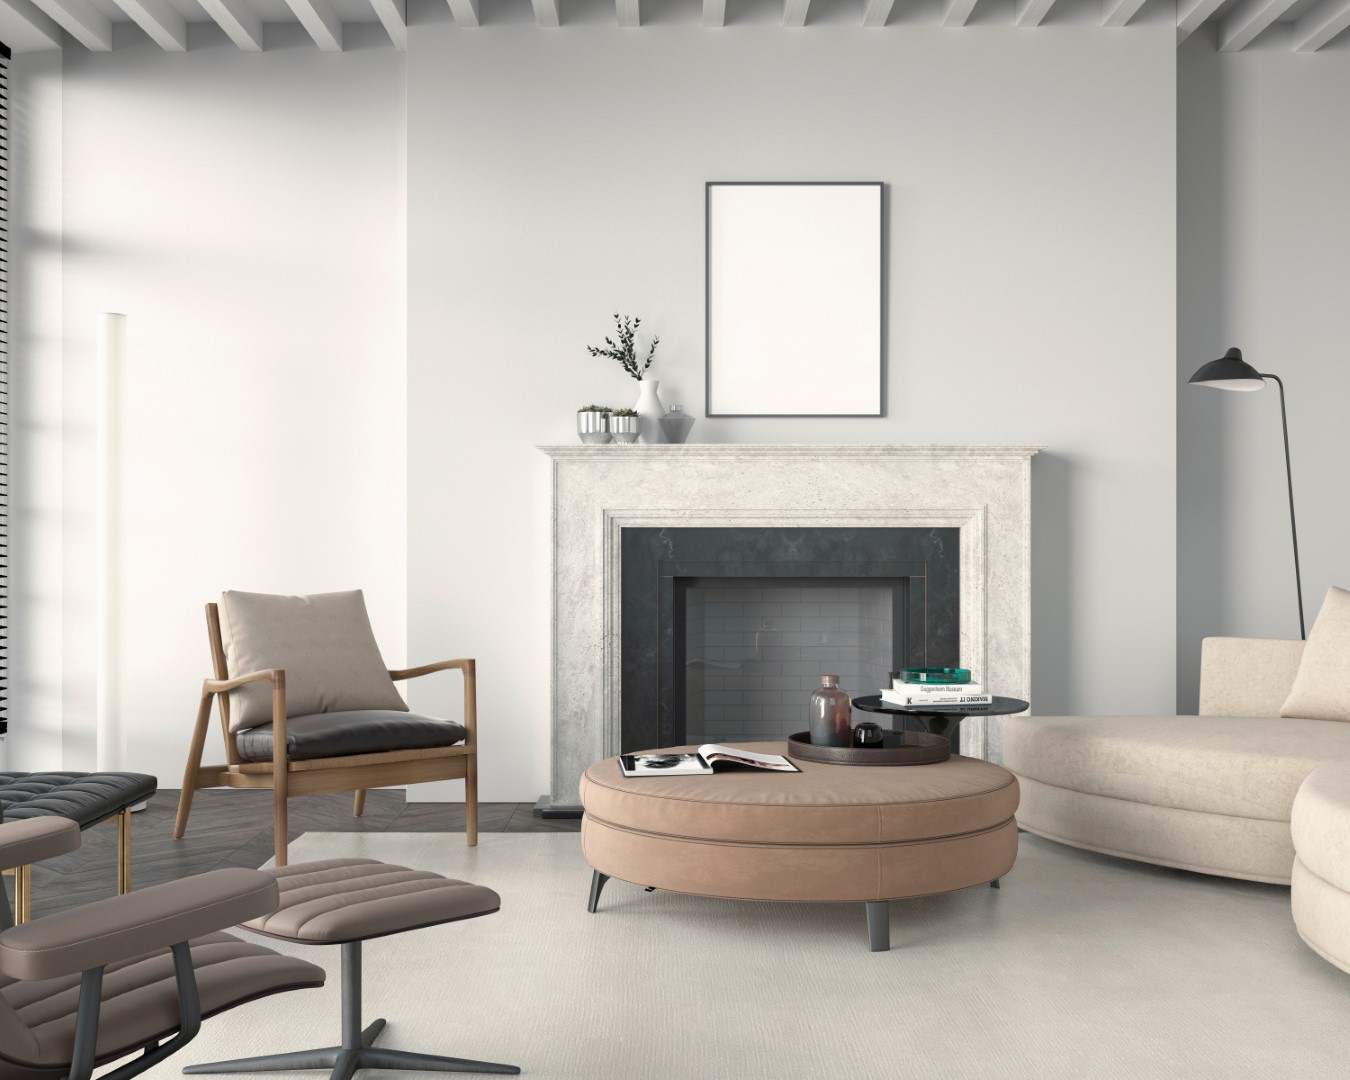 Living Room With A Fireplace 2022 07 07 00 46 47 Utc